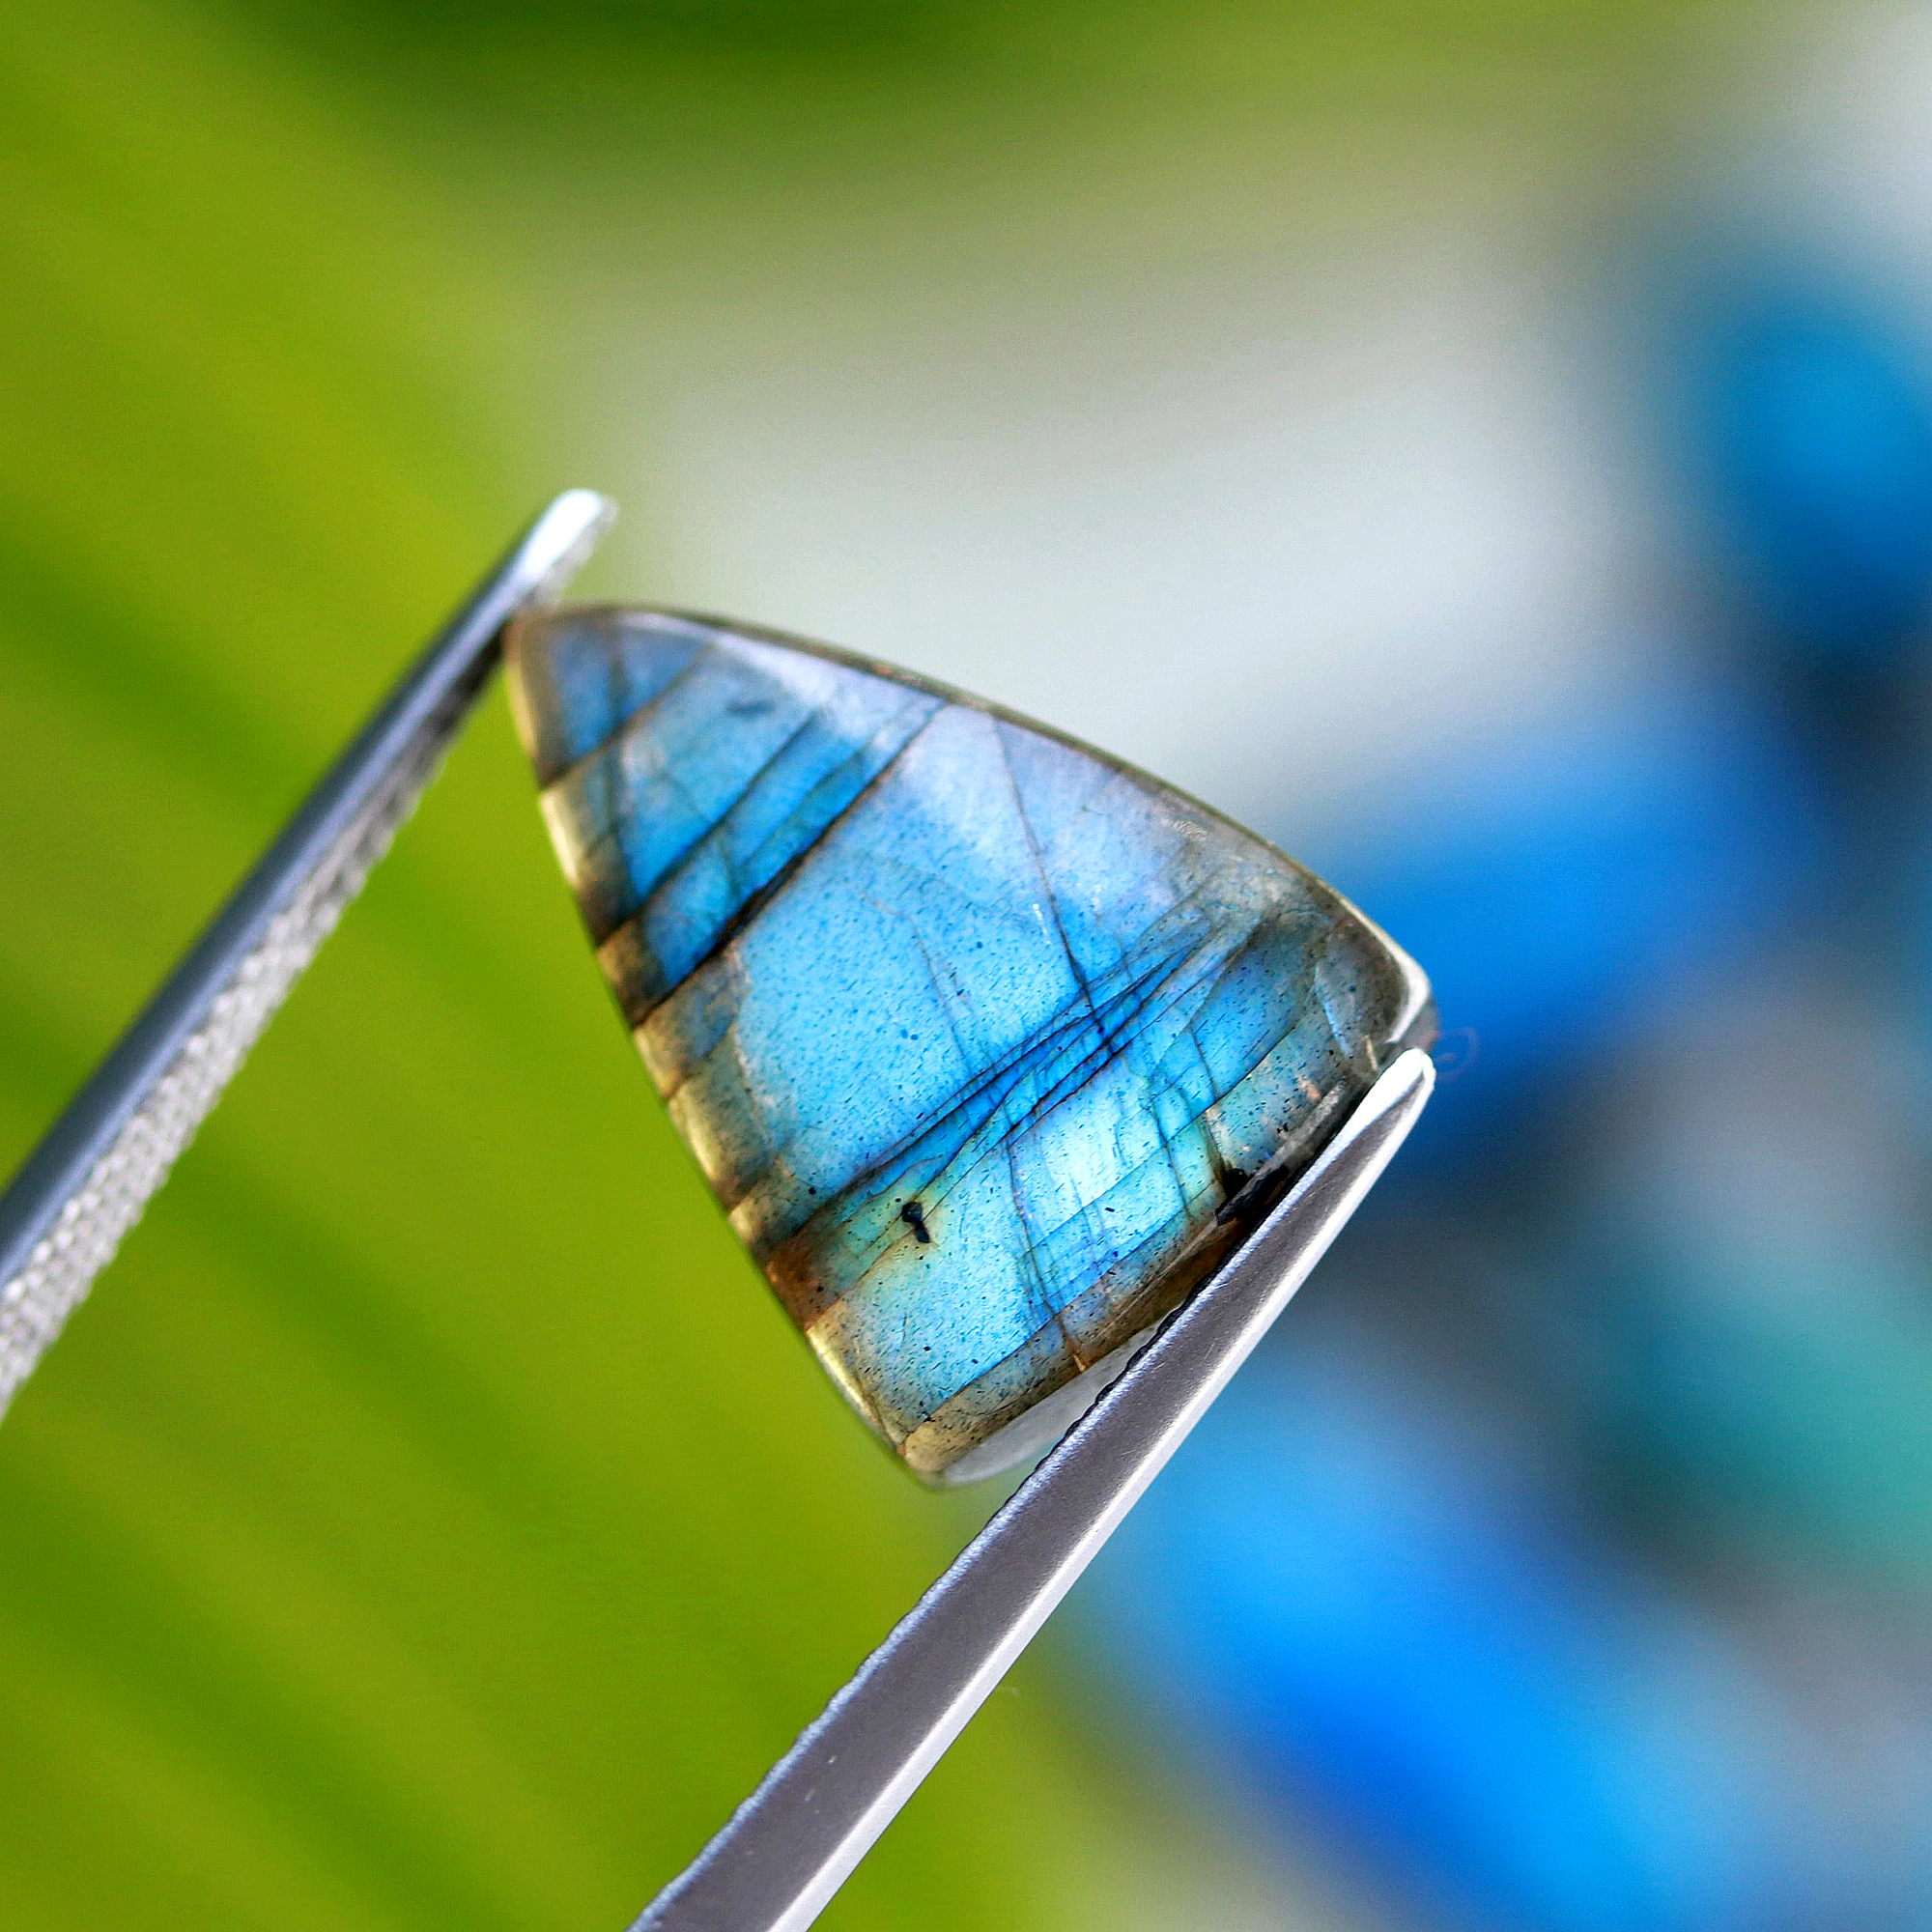 18 Pcs 199Cts lot Natural Blue Labradorite cabochon gemstone For Jewelry Making Crystal Cabochon Semi-Precious Labradorite Gemstone 27x11 12x12mm #5475